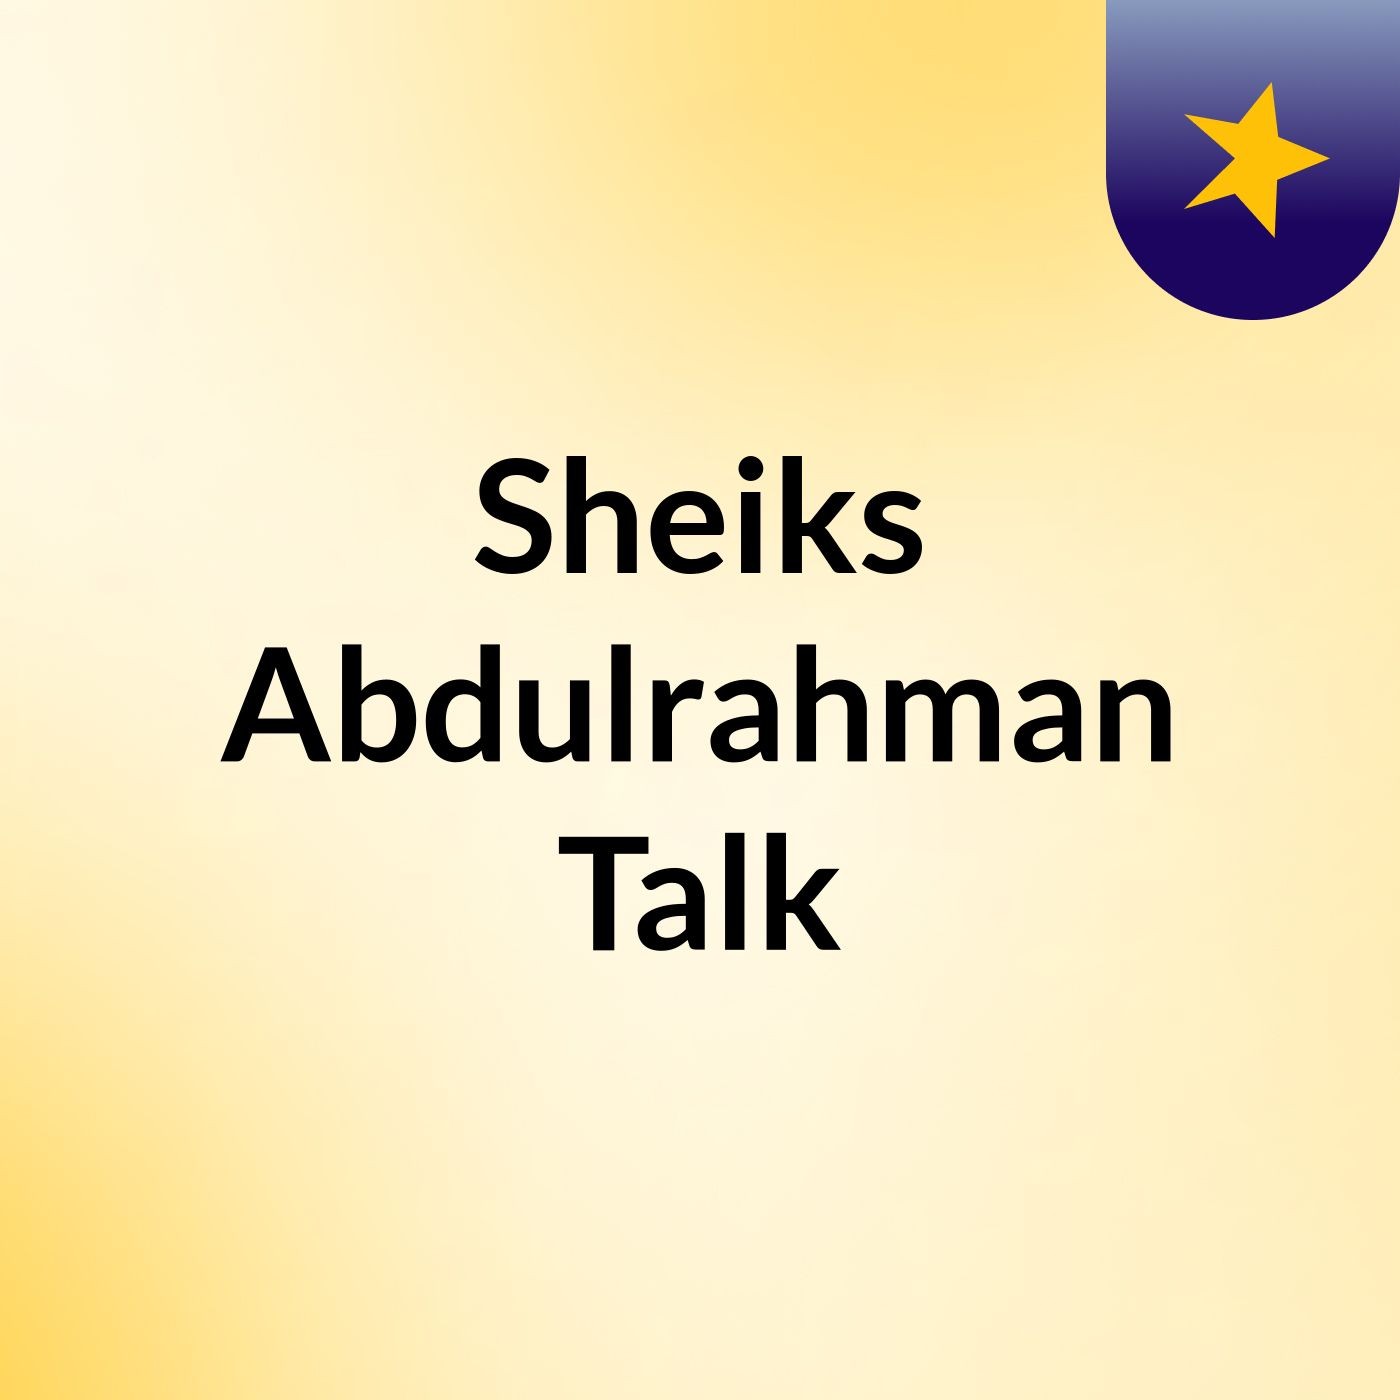 Sheiks Abdulrahman Talk